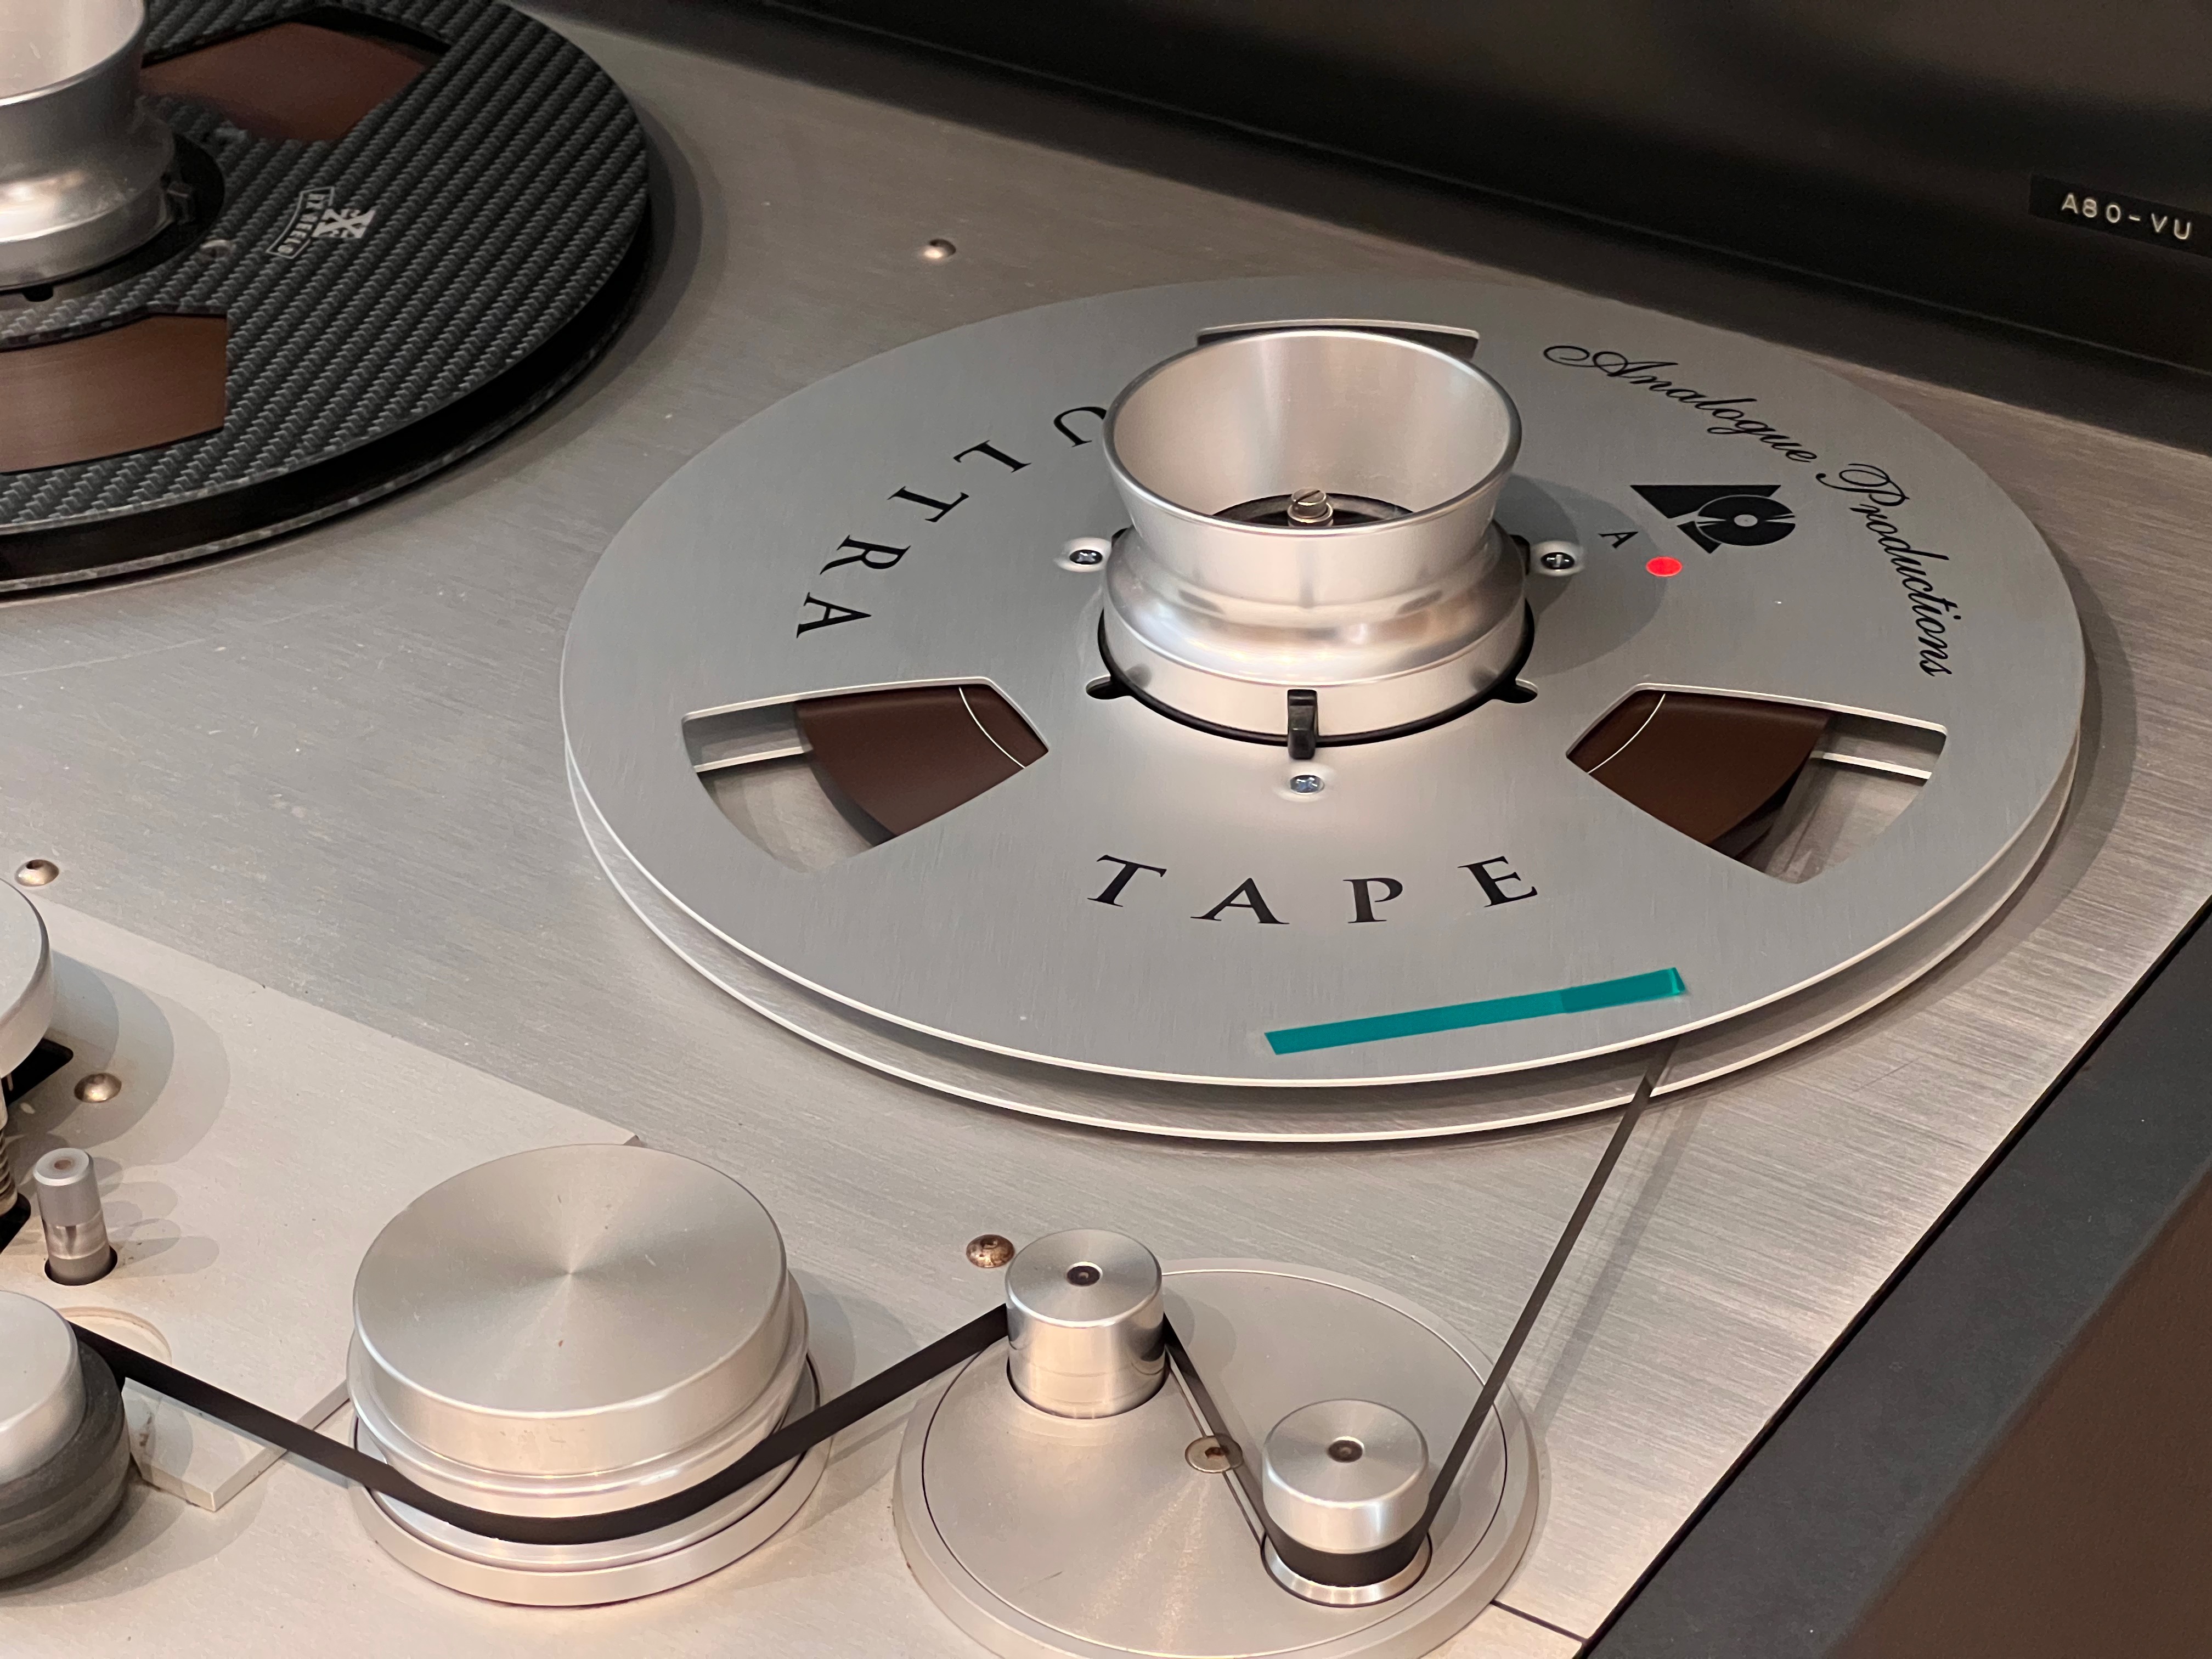 Metaxas & Sins unveil new reel-to-reel tape machine – The Vinyl